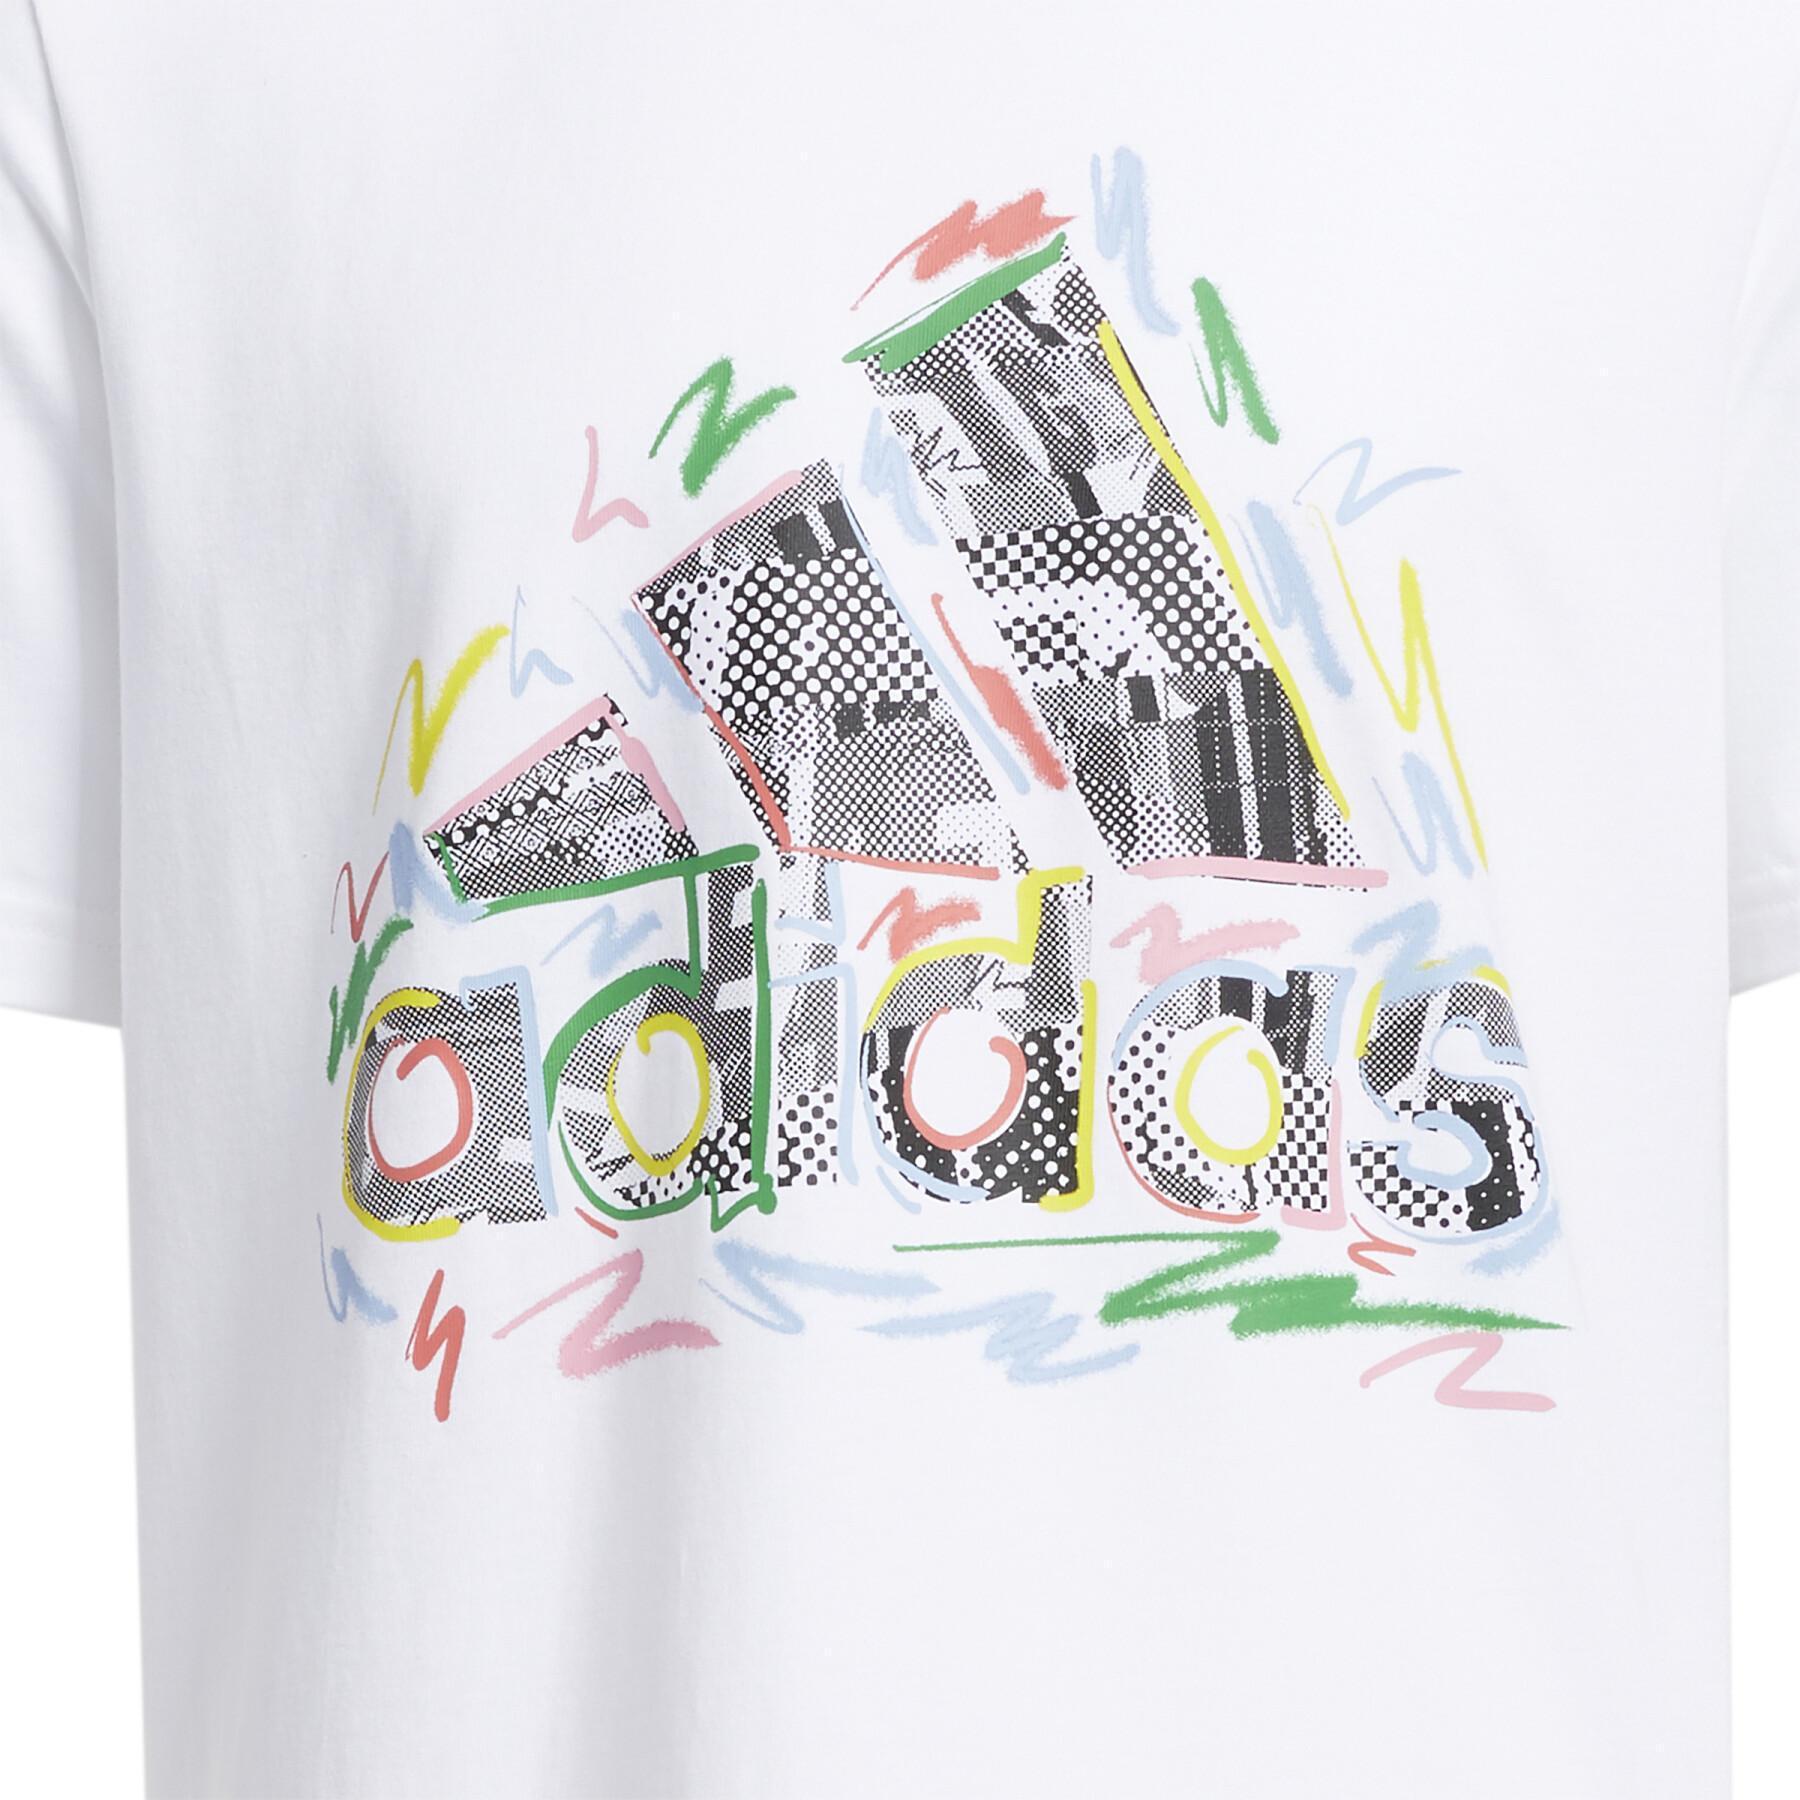 Child's T-shirt adidas Pride